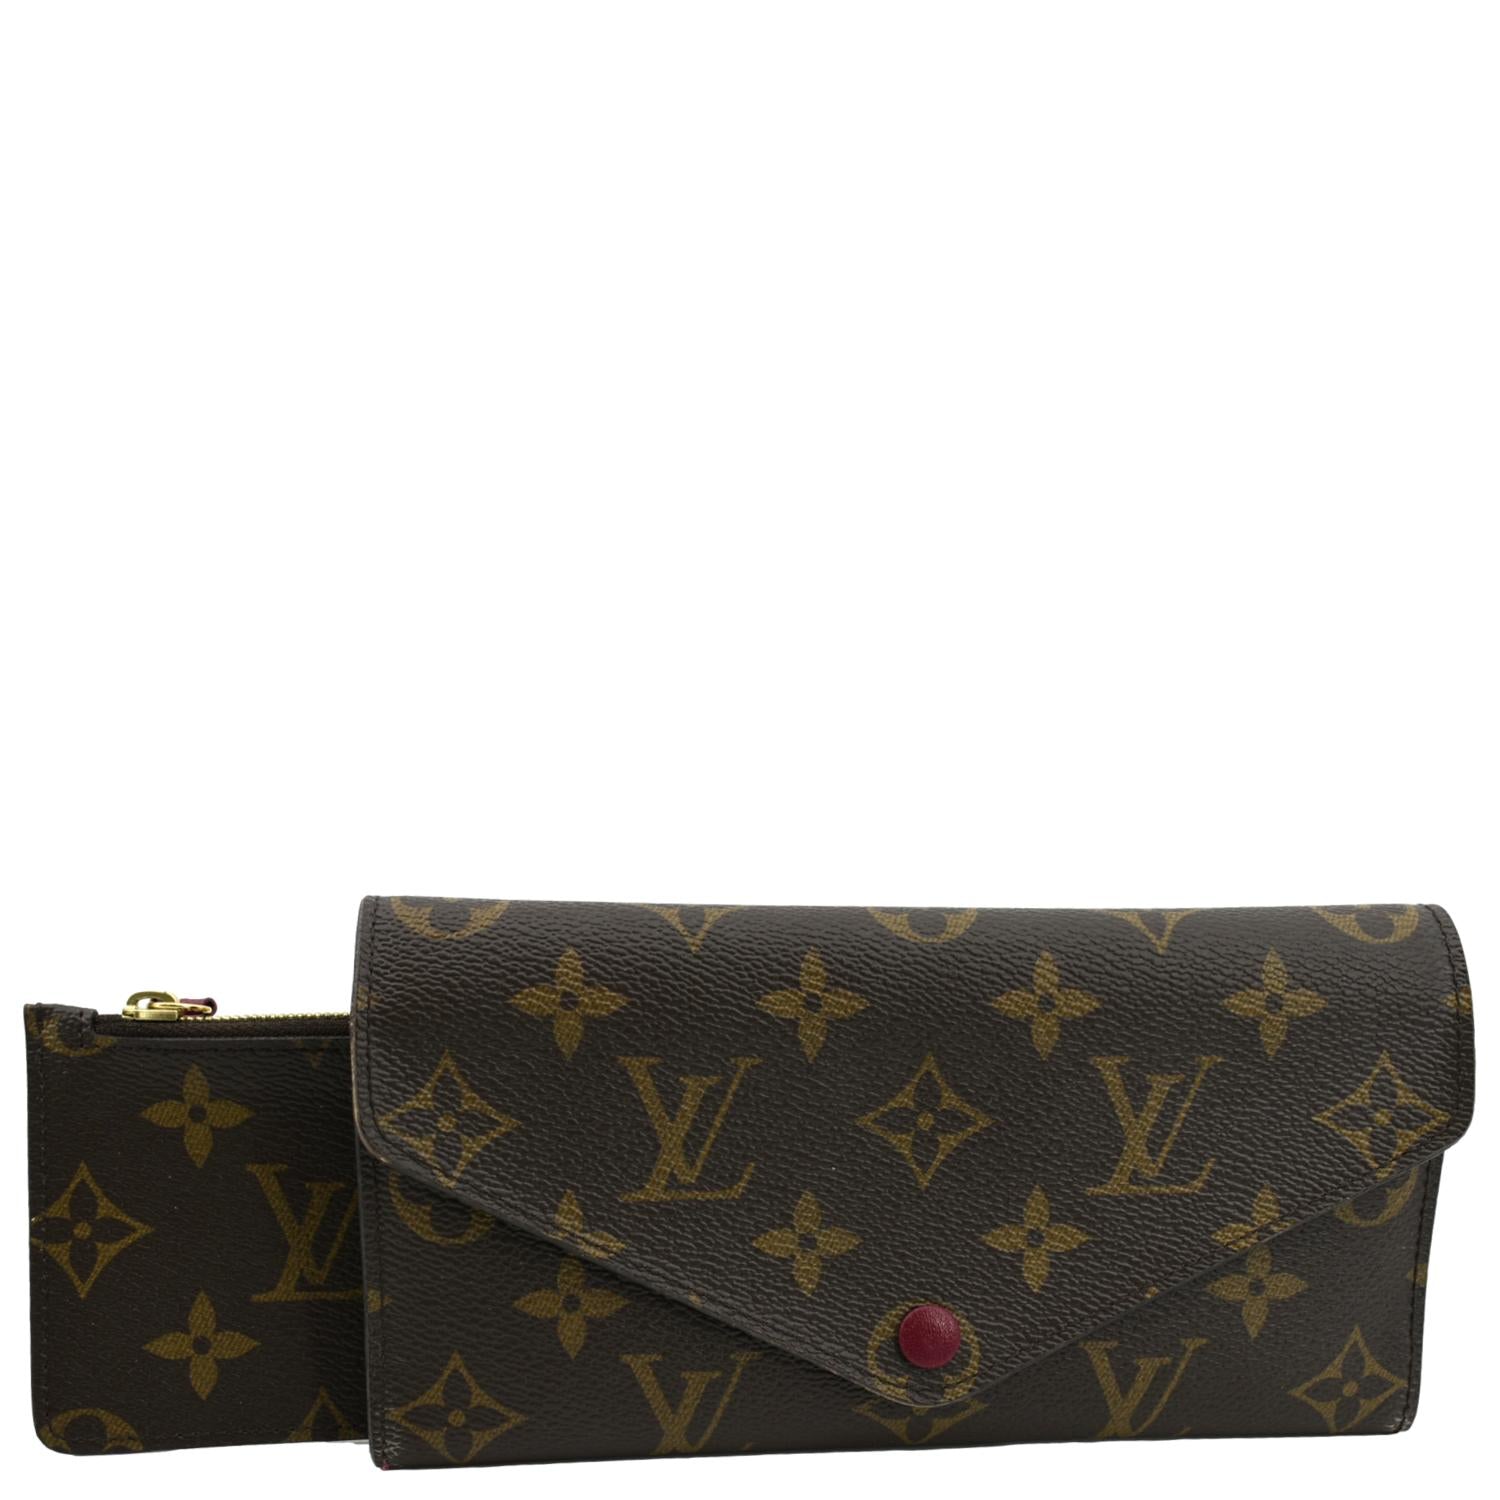 Authentic Louis Vuitton LV Monogram Wallet USED - Bags & Wallets